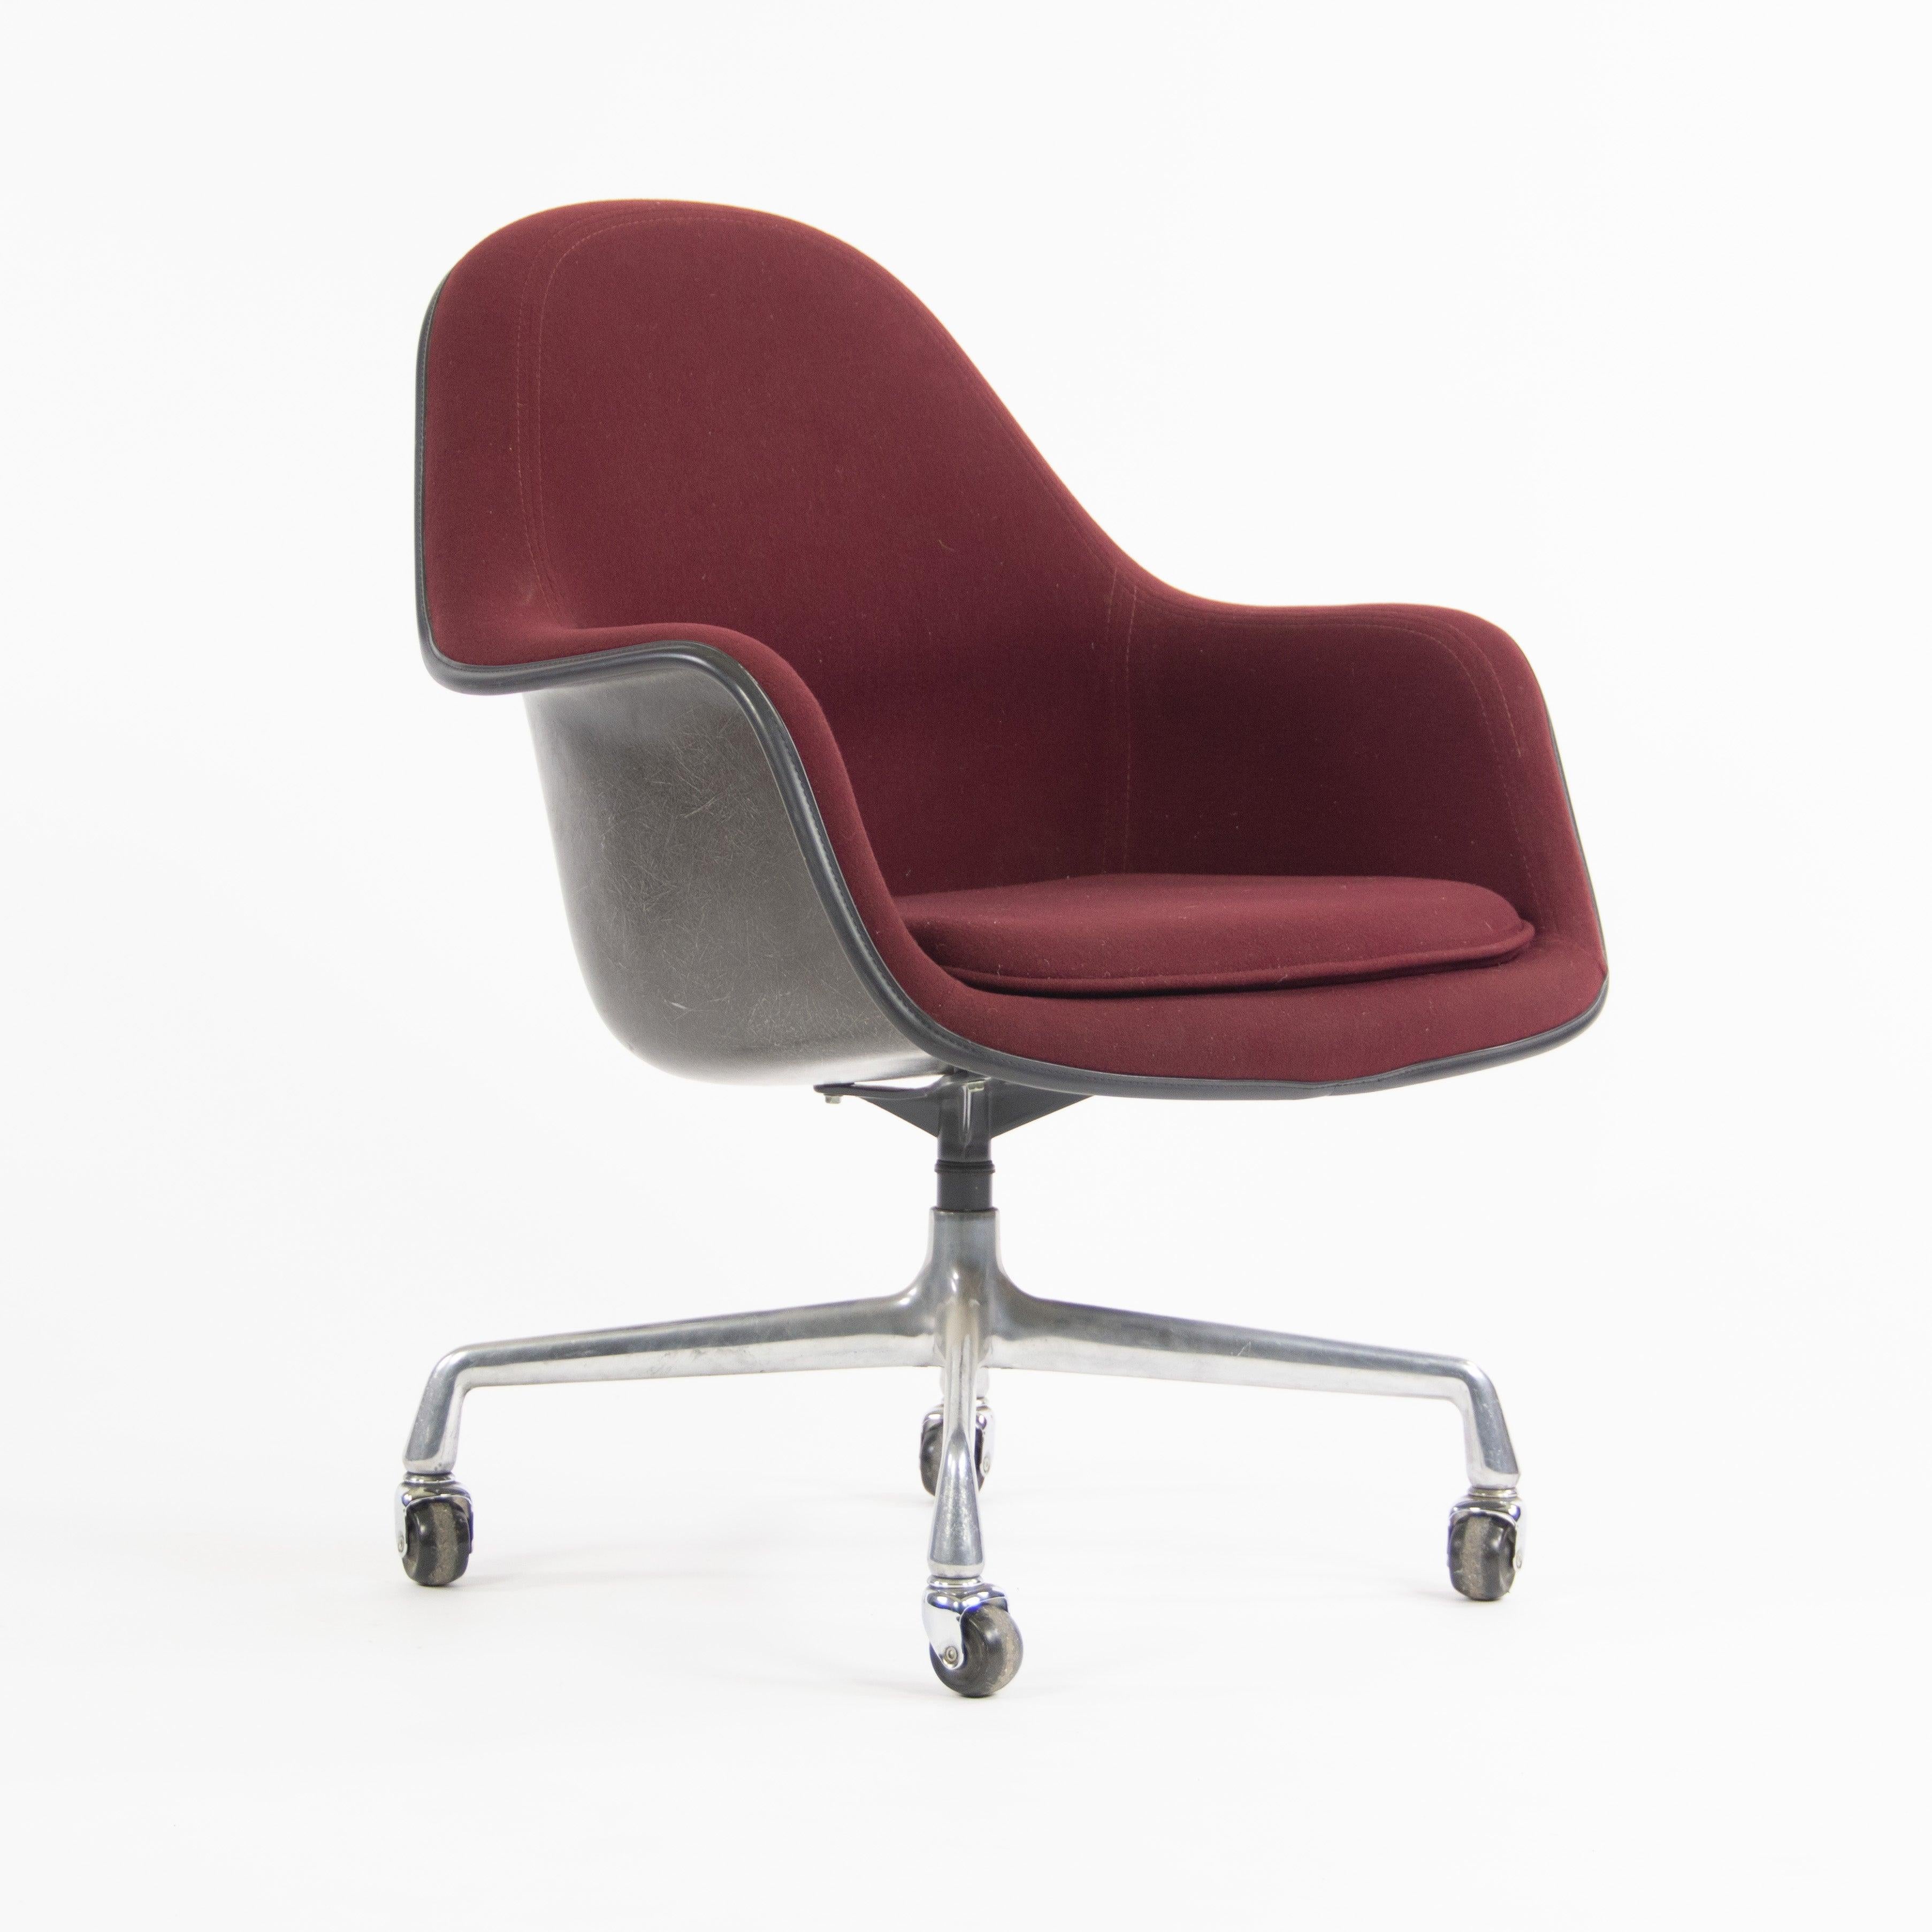 Metal 1985 Eames Herman Miller EC175 Upholstered Fiberglass Shell Chair Museum Quality For Sale